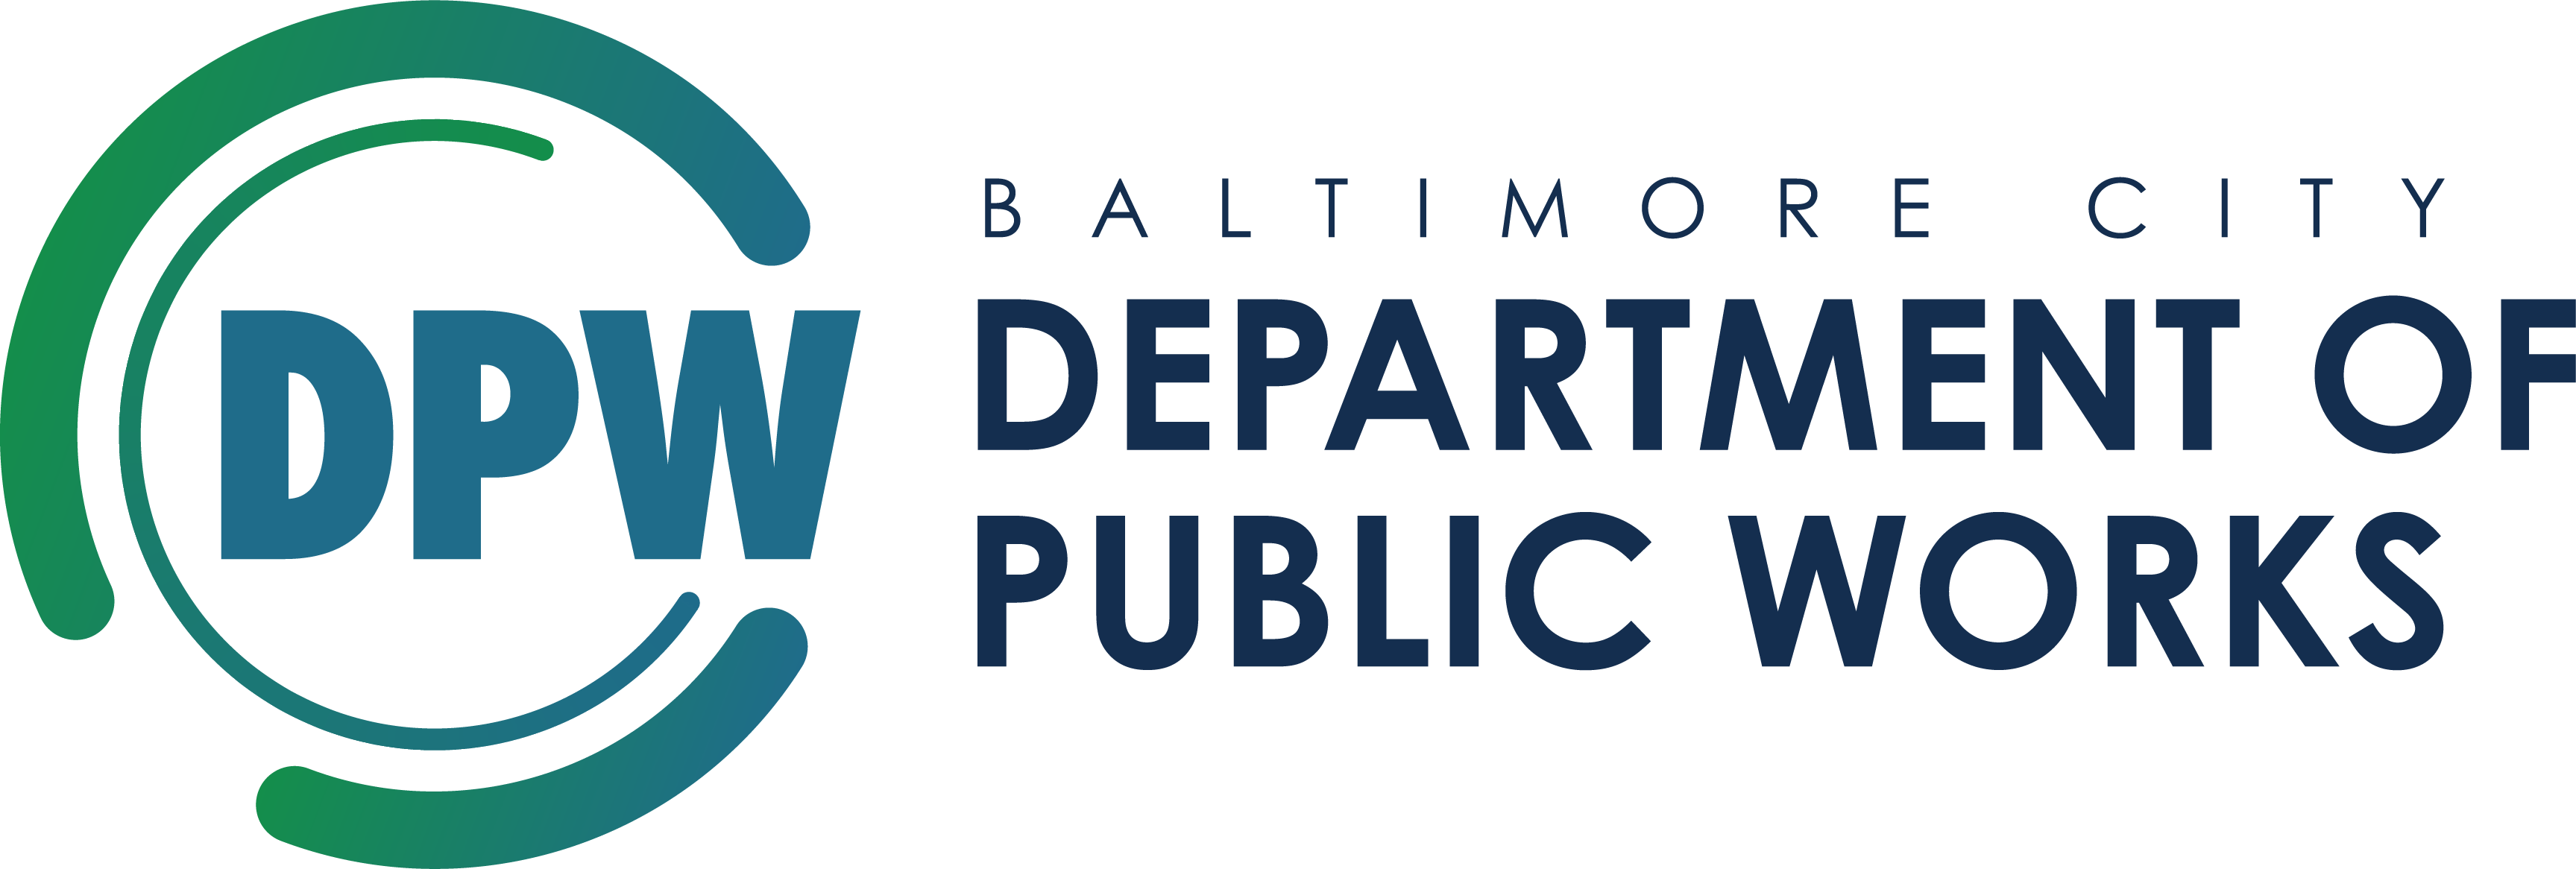 Baltimore DPW